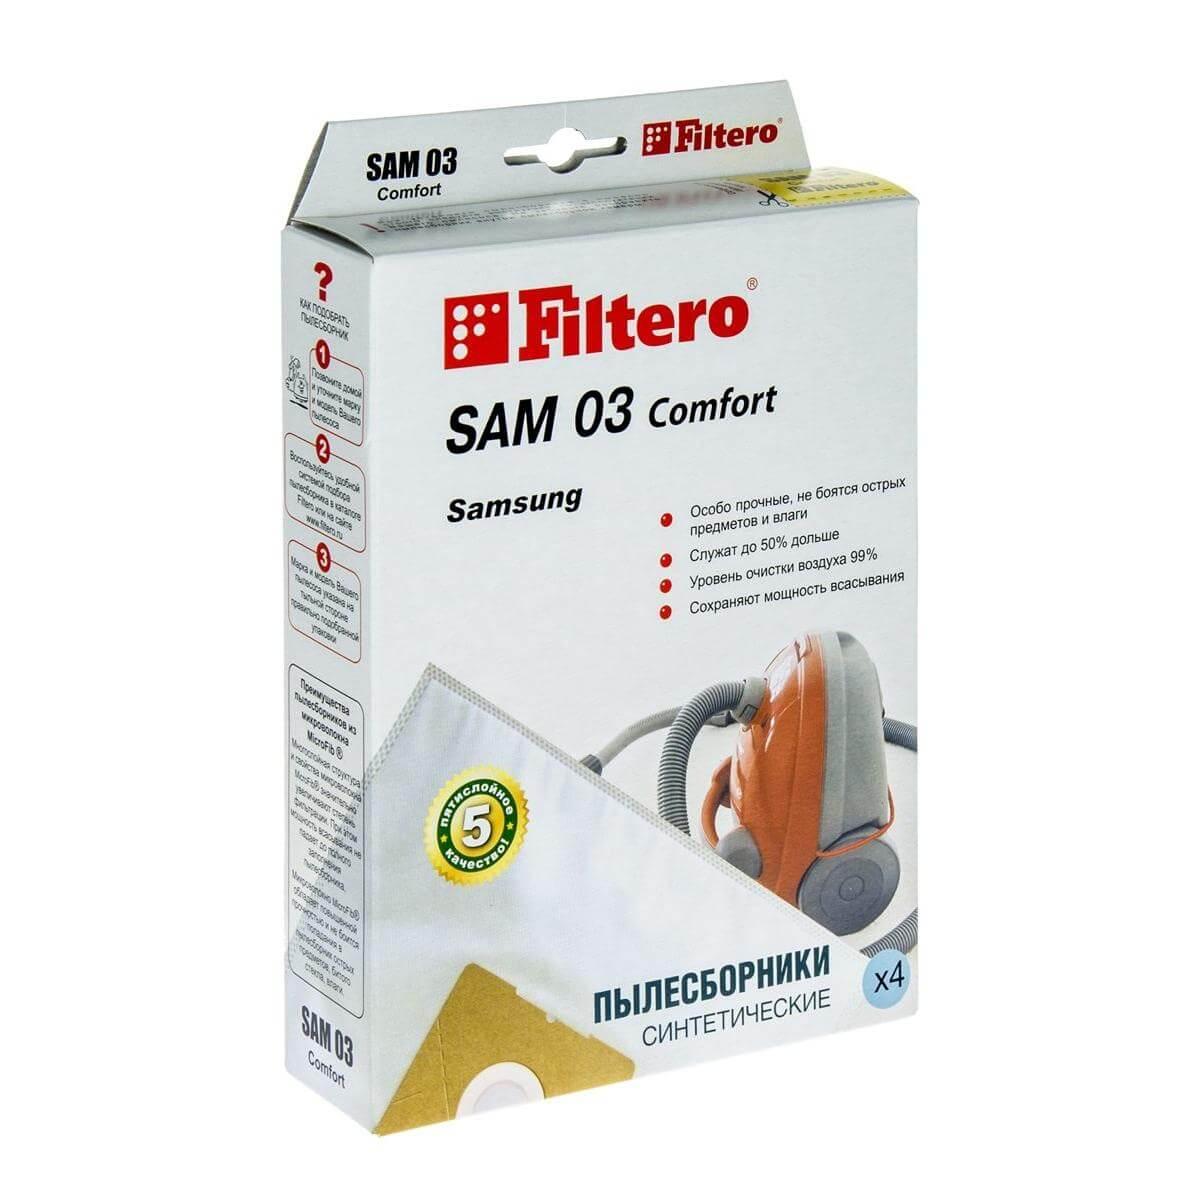 Filtero SAM 03 Comfort front